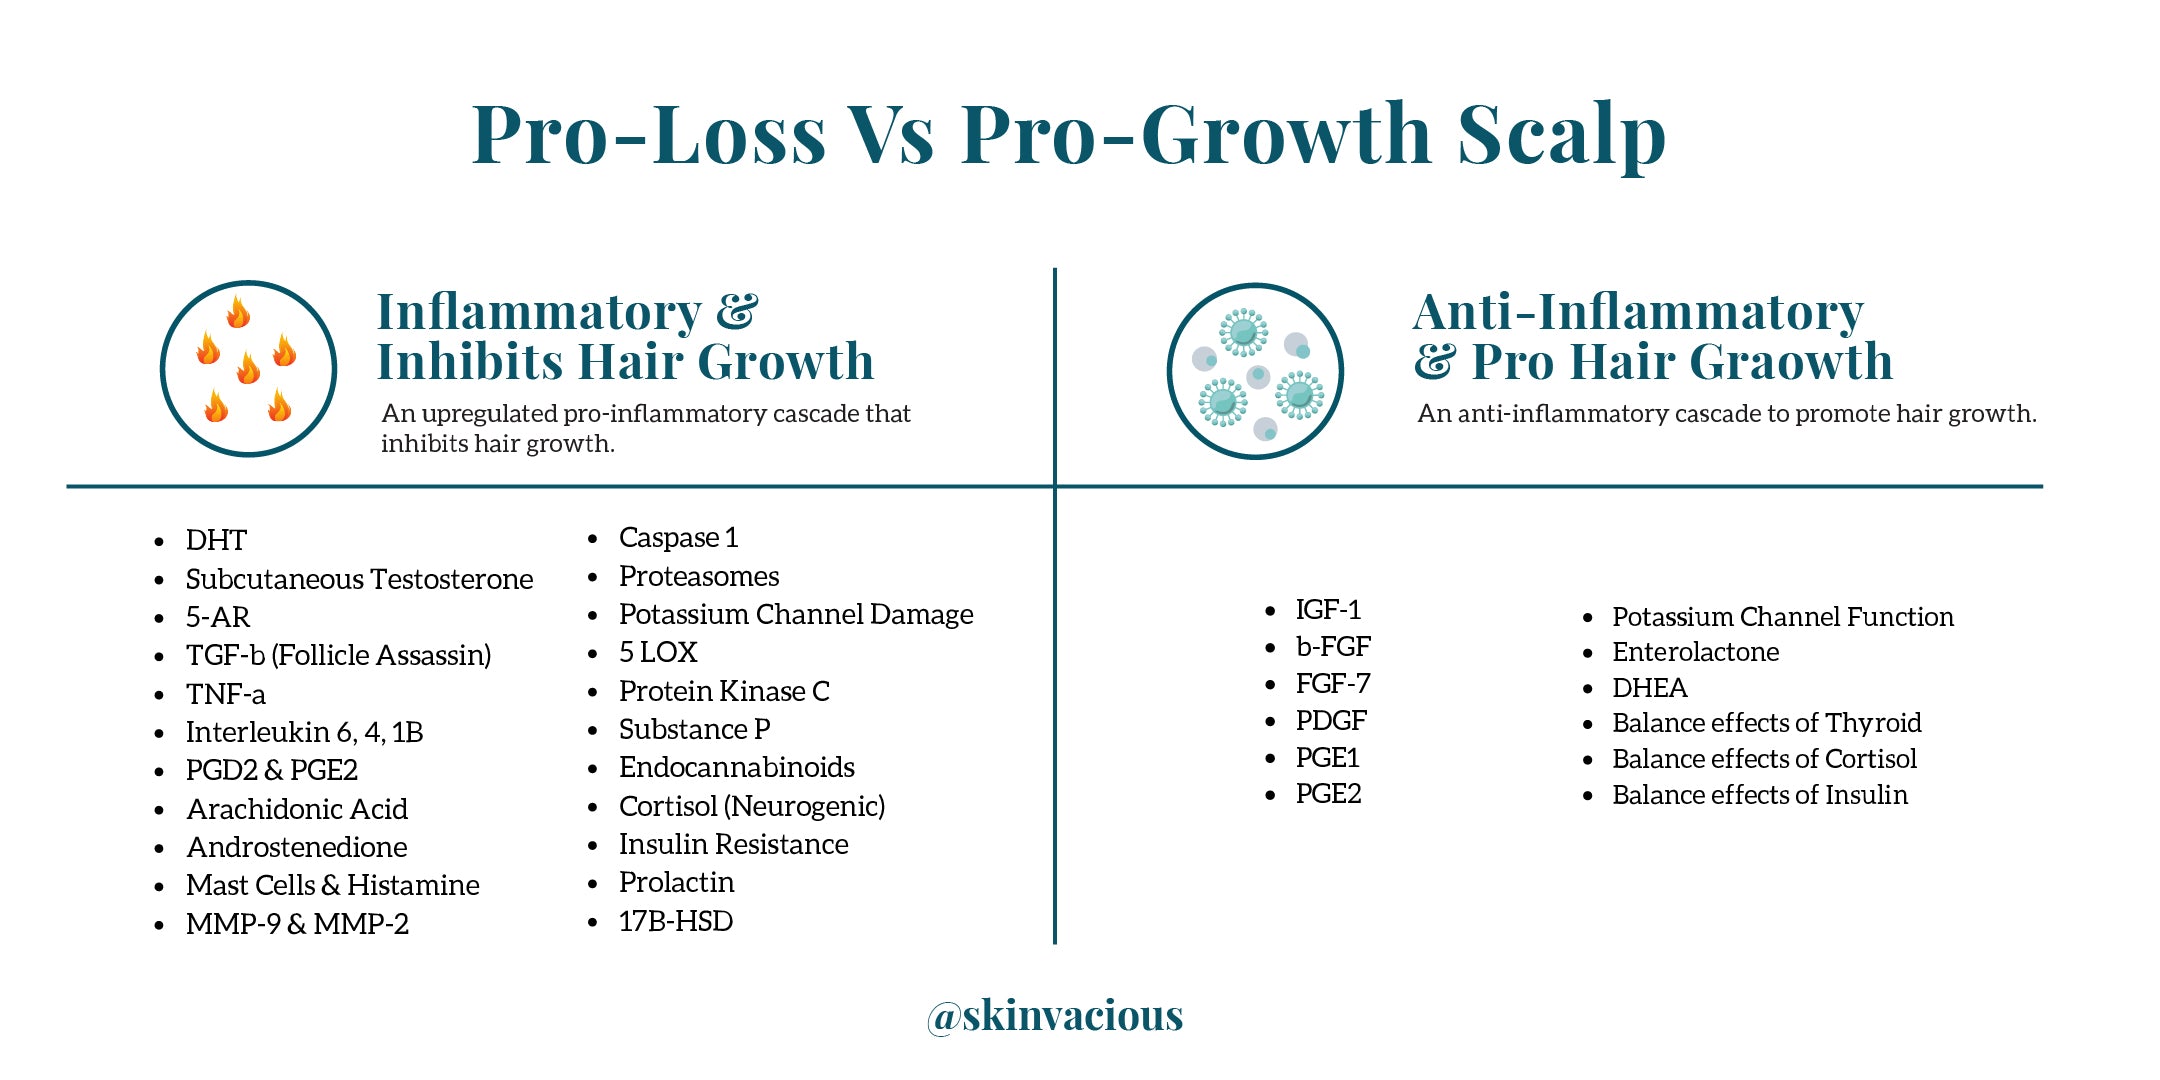 Pro Hair Loss Vs. Pro Hair Growth; Inflammatory vs Anti-Inflammatory - skinVacious